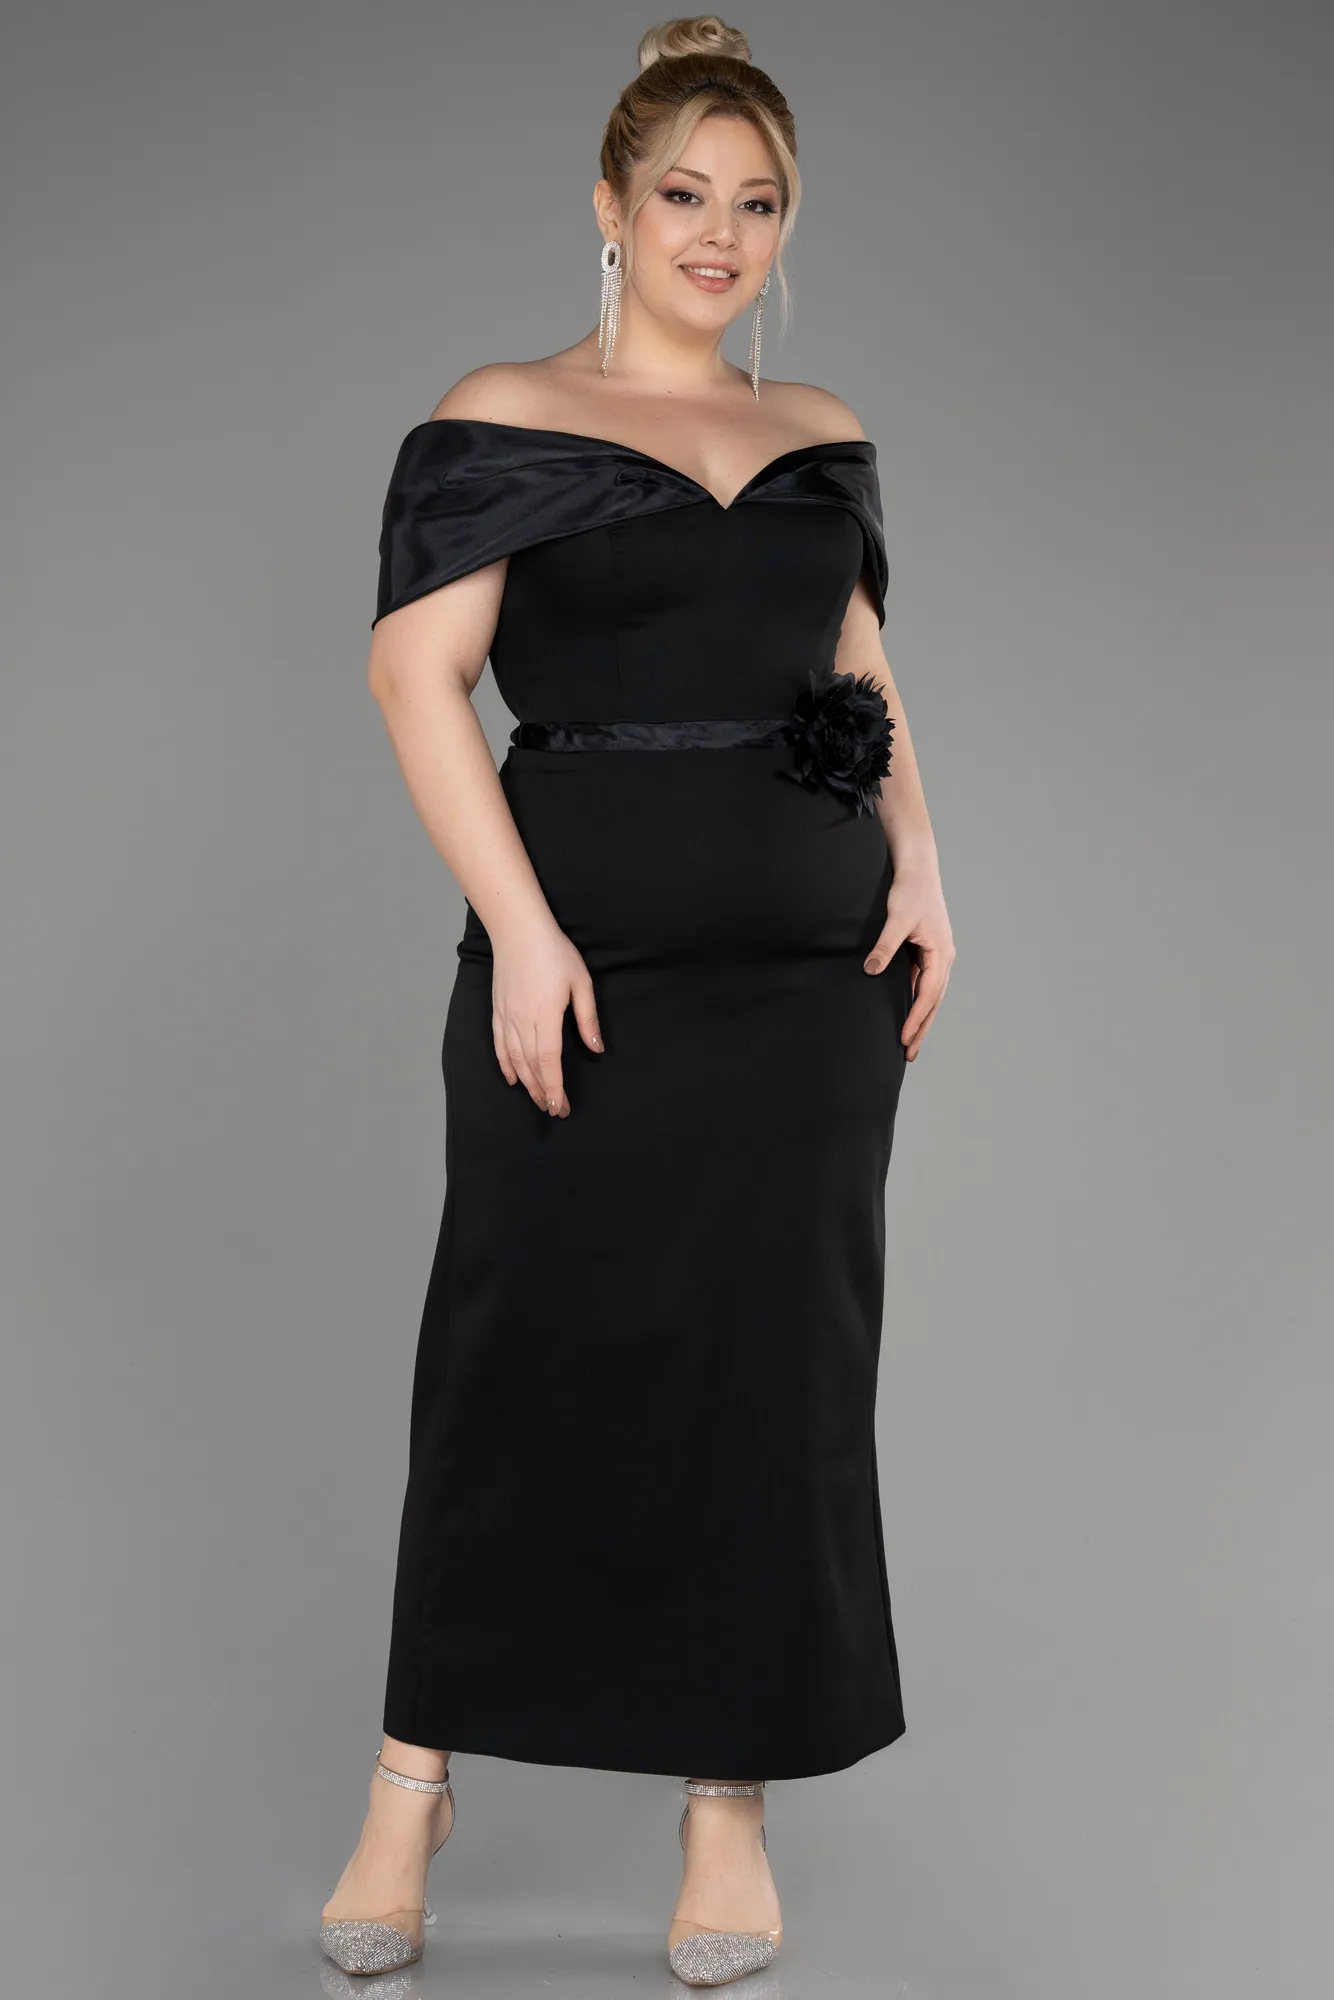 Black-Midi Plus Size Cocktail Dress ABK2015